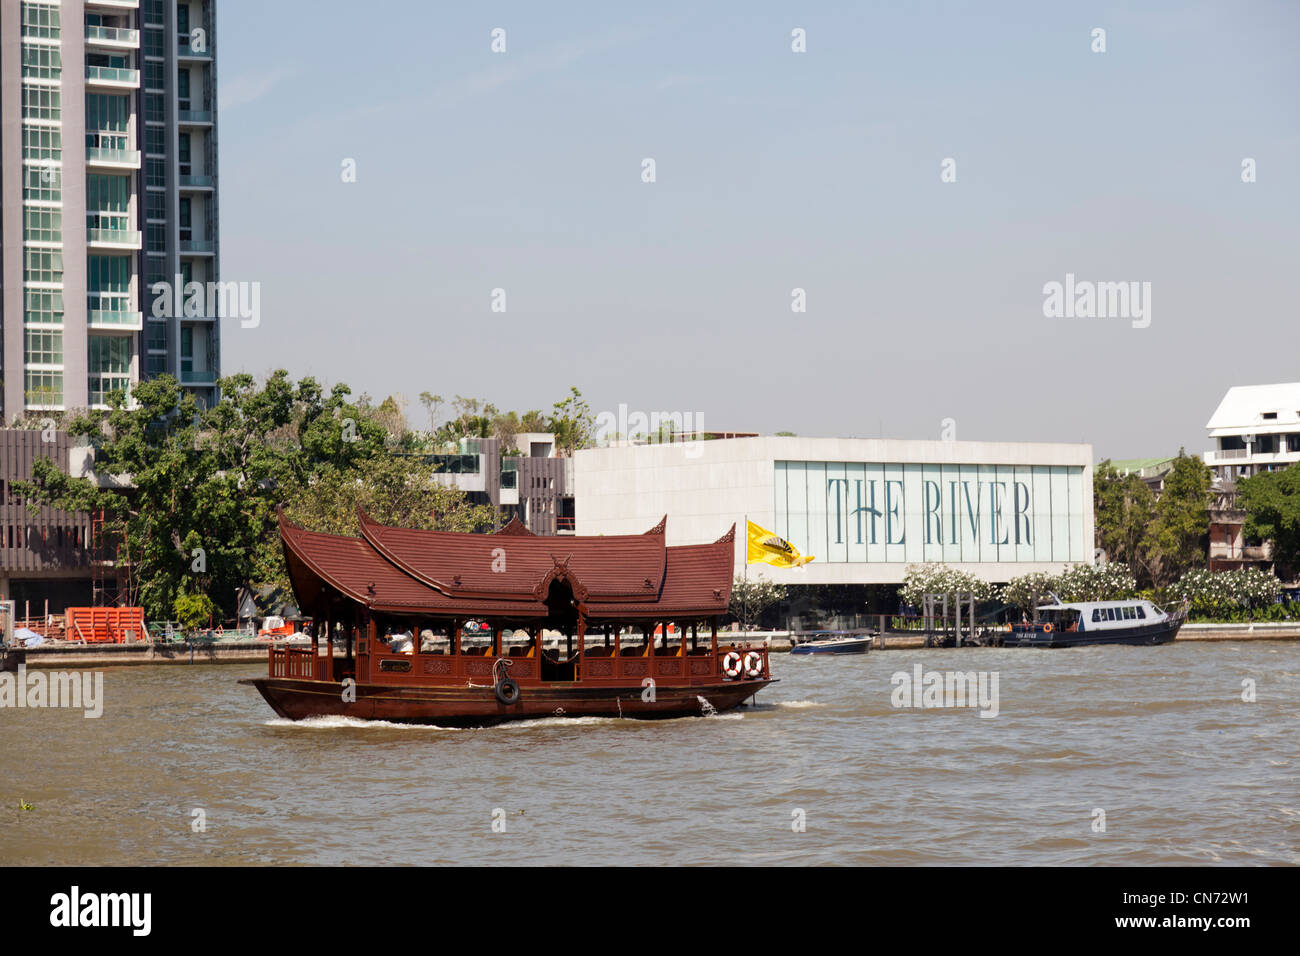 Un pittoresco hotel shuttle barca sul fiume Chao Phraya (Bangkok) pittoresco bateau-navette d'hôtel sur le fleuve Chao Phraya Foto Stock